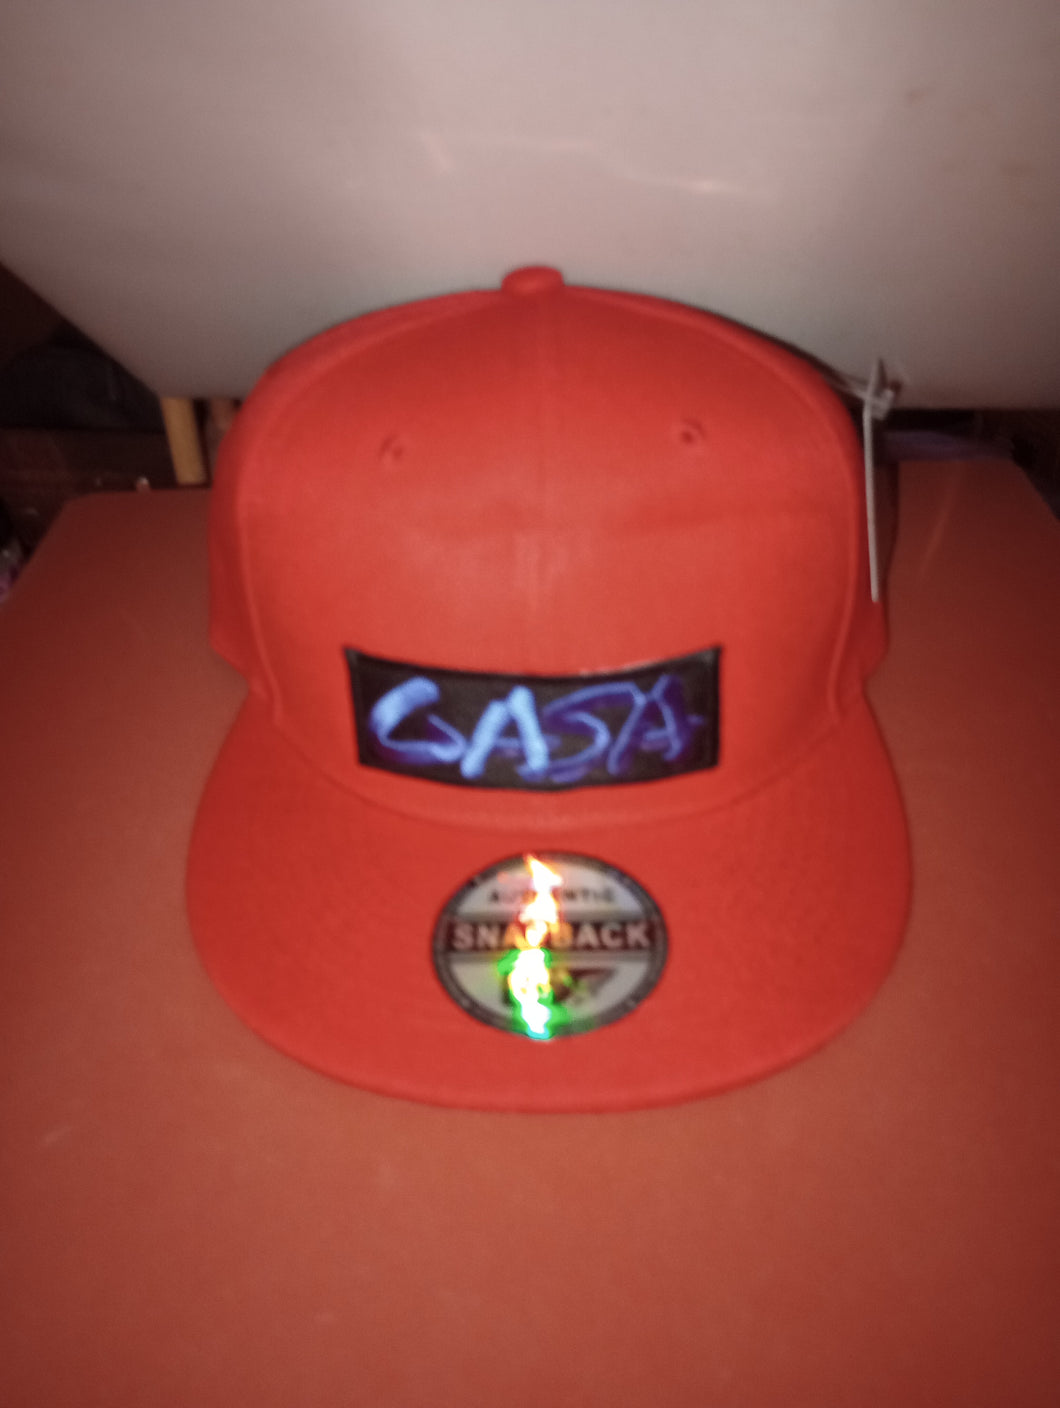 GASA snap back cap